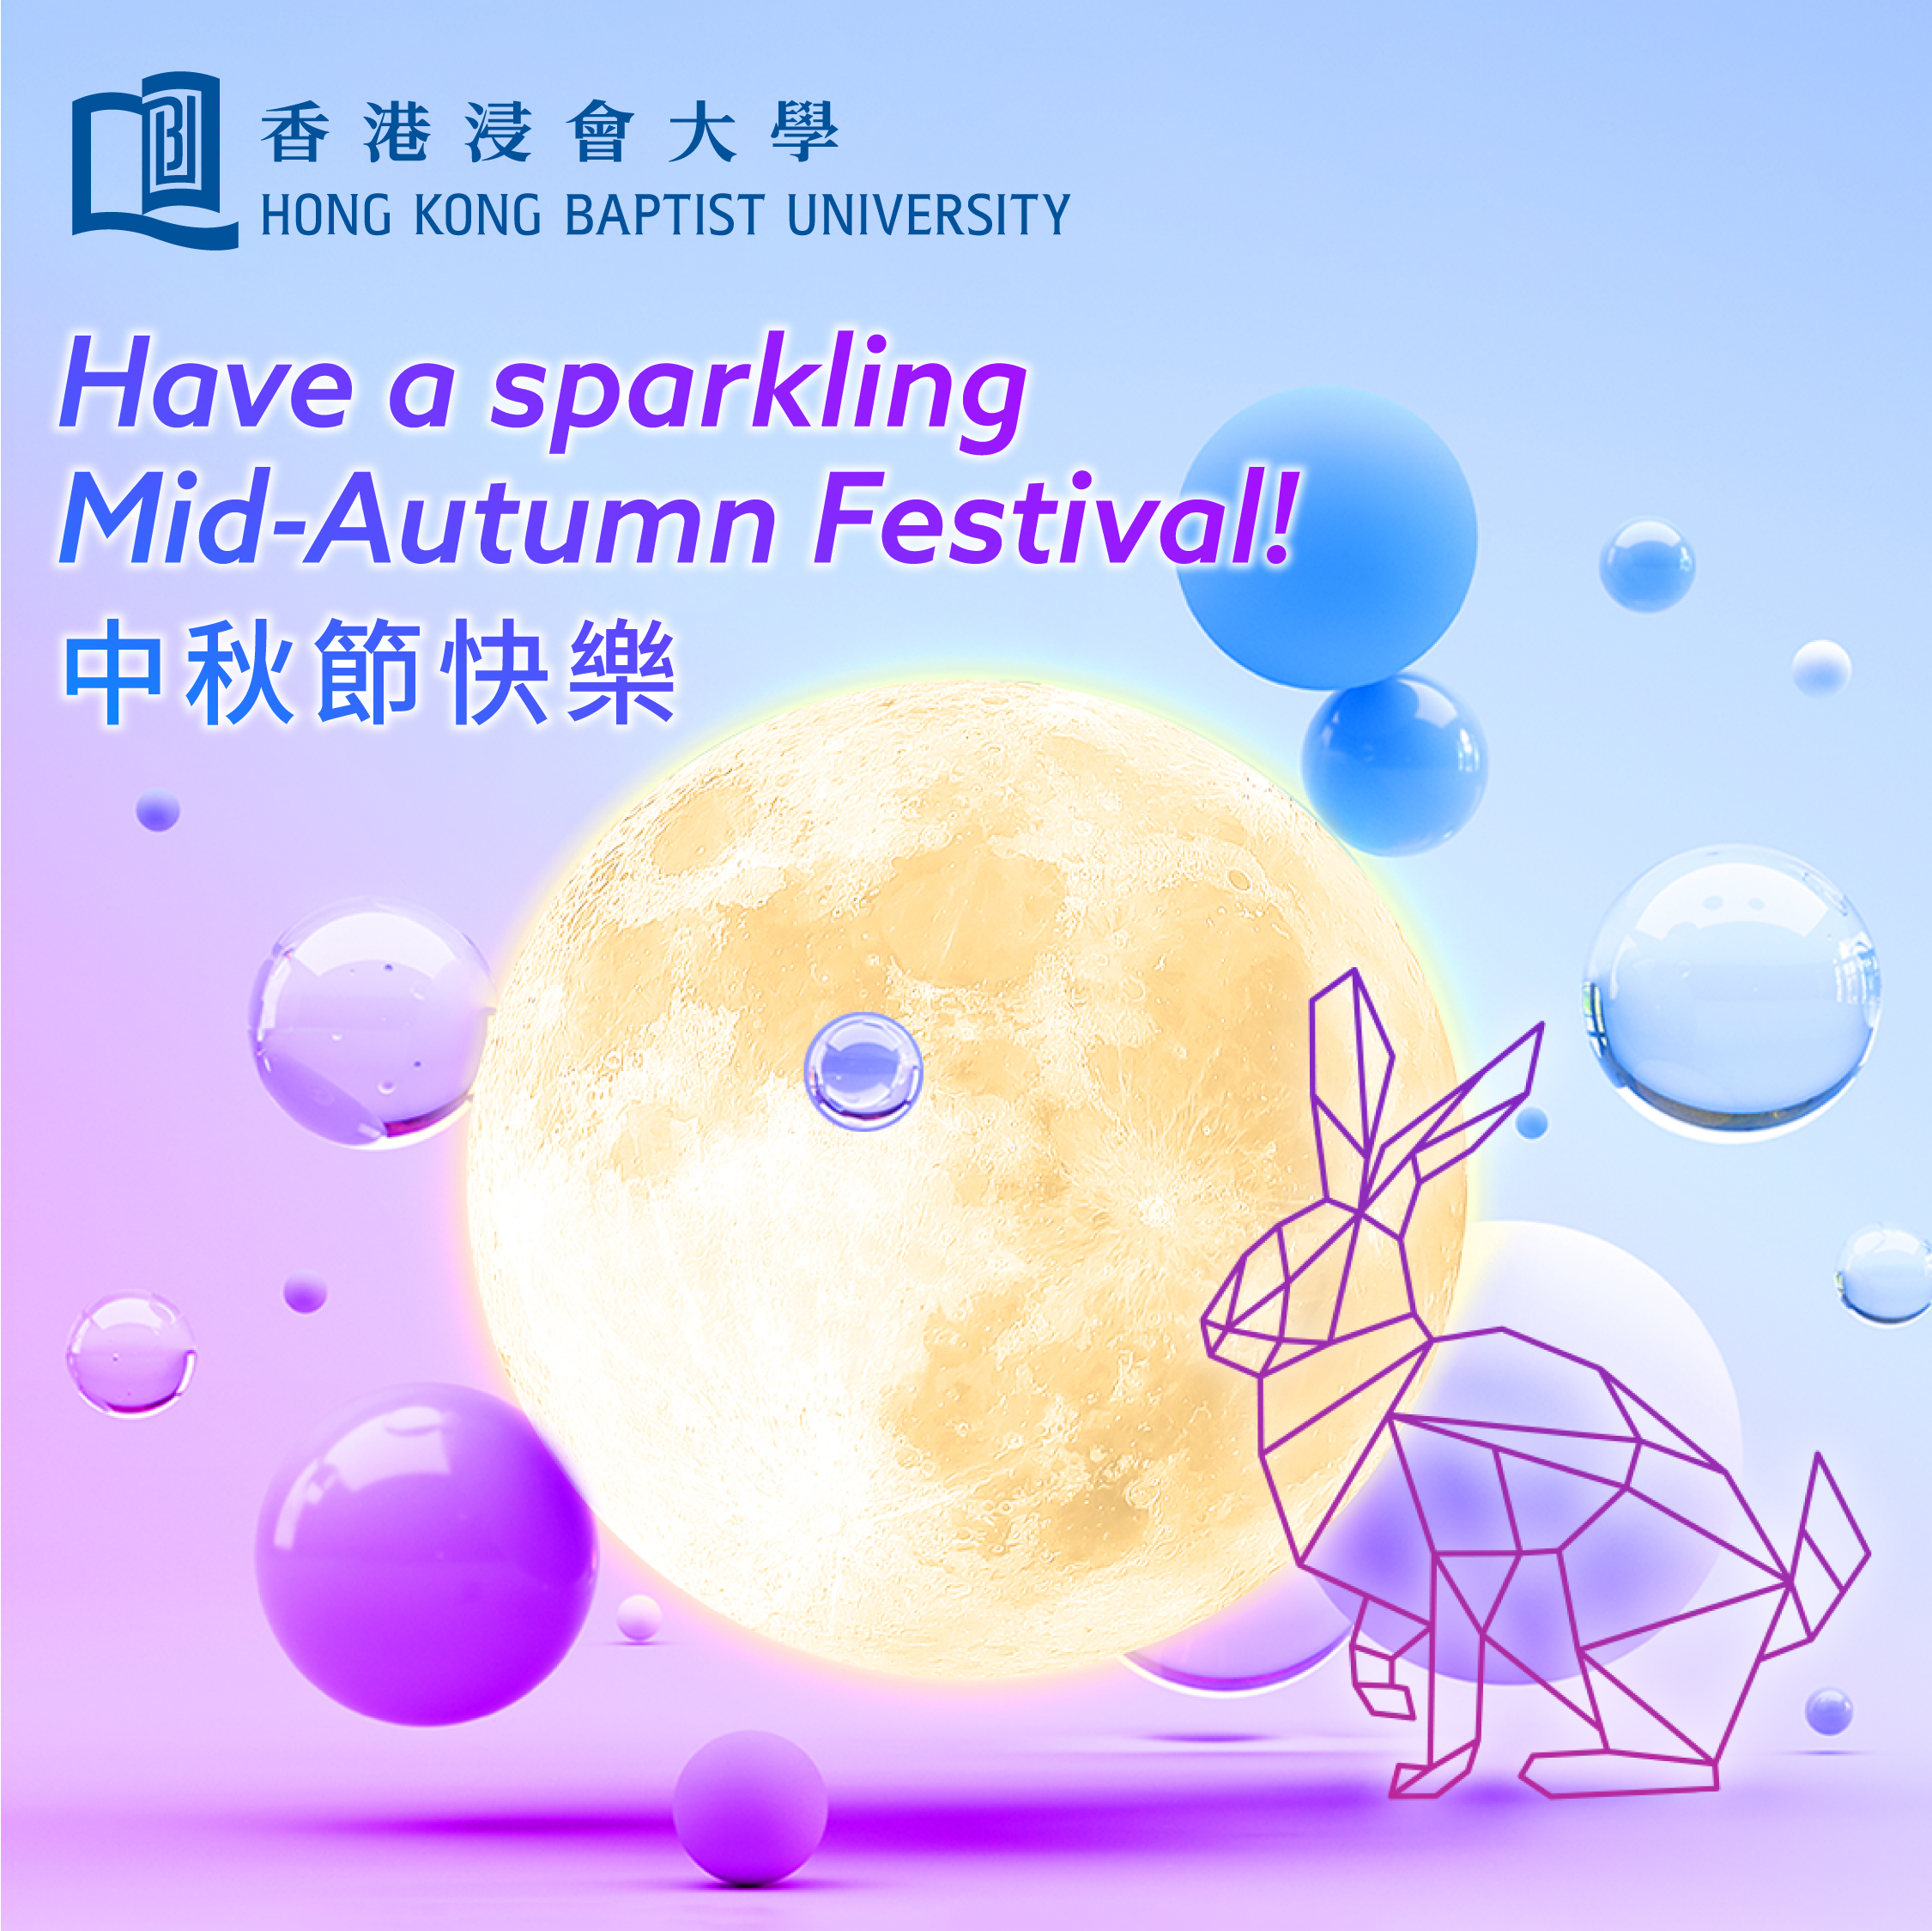 Have a sparkling Mid-Autumn Festival!